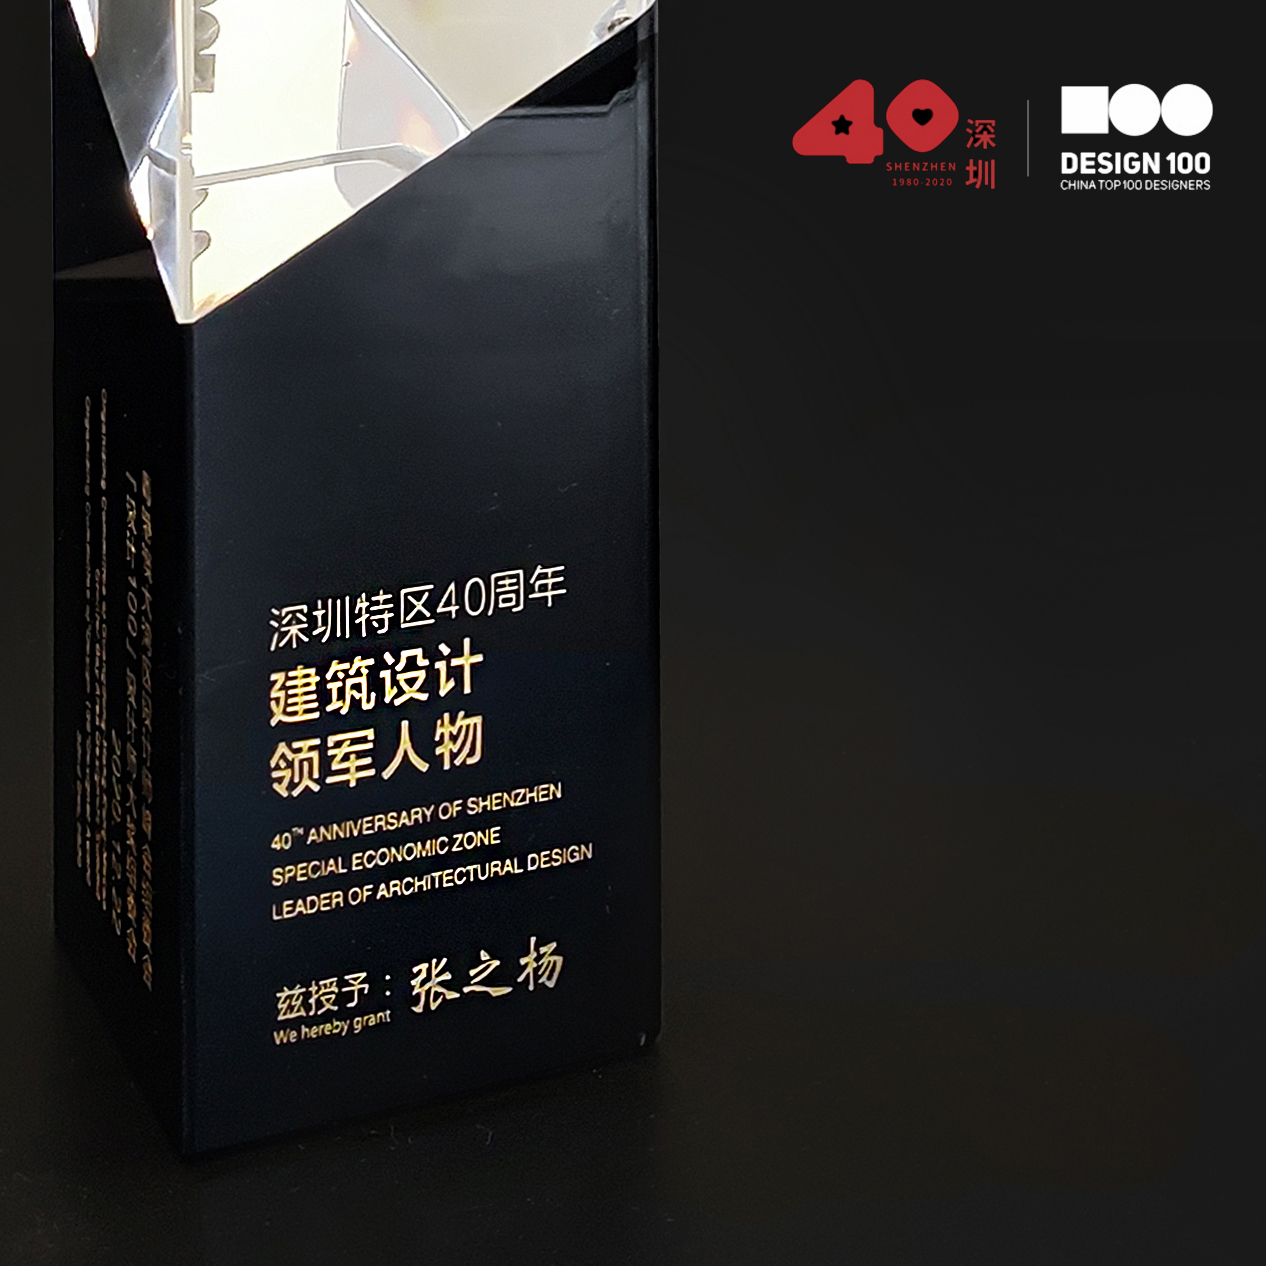 Zhang Zhiyang won the 40th anniversary honor of Shenzhen Design